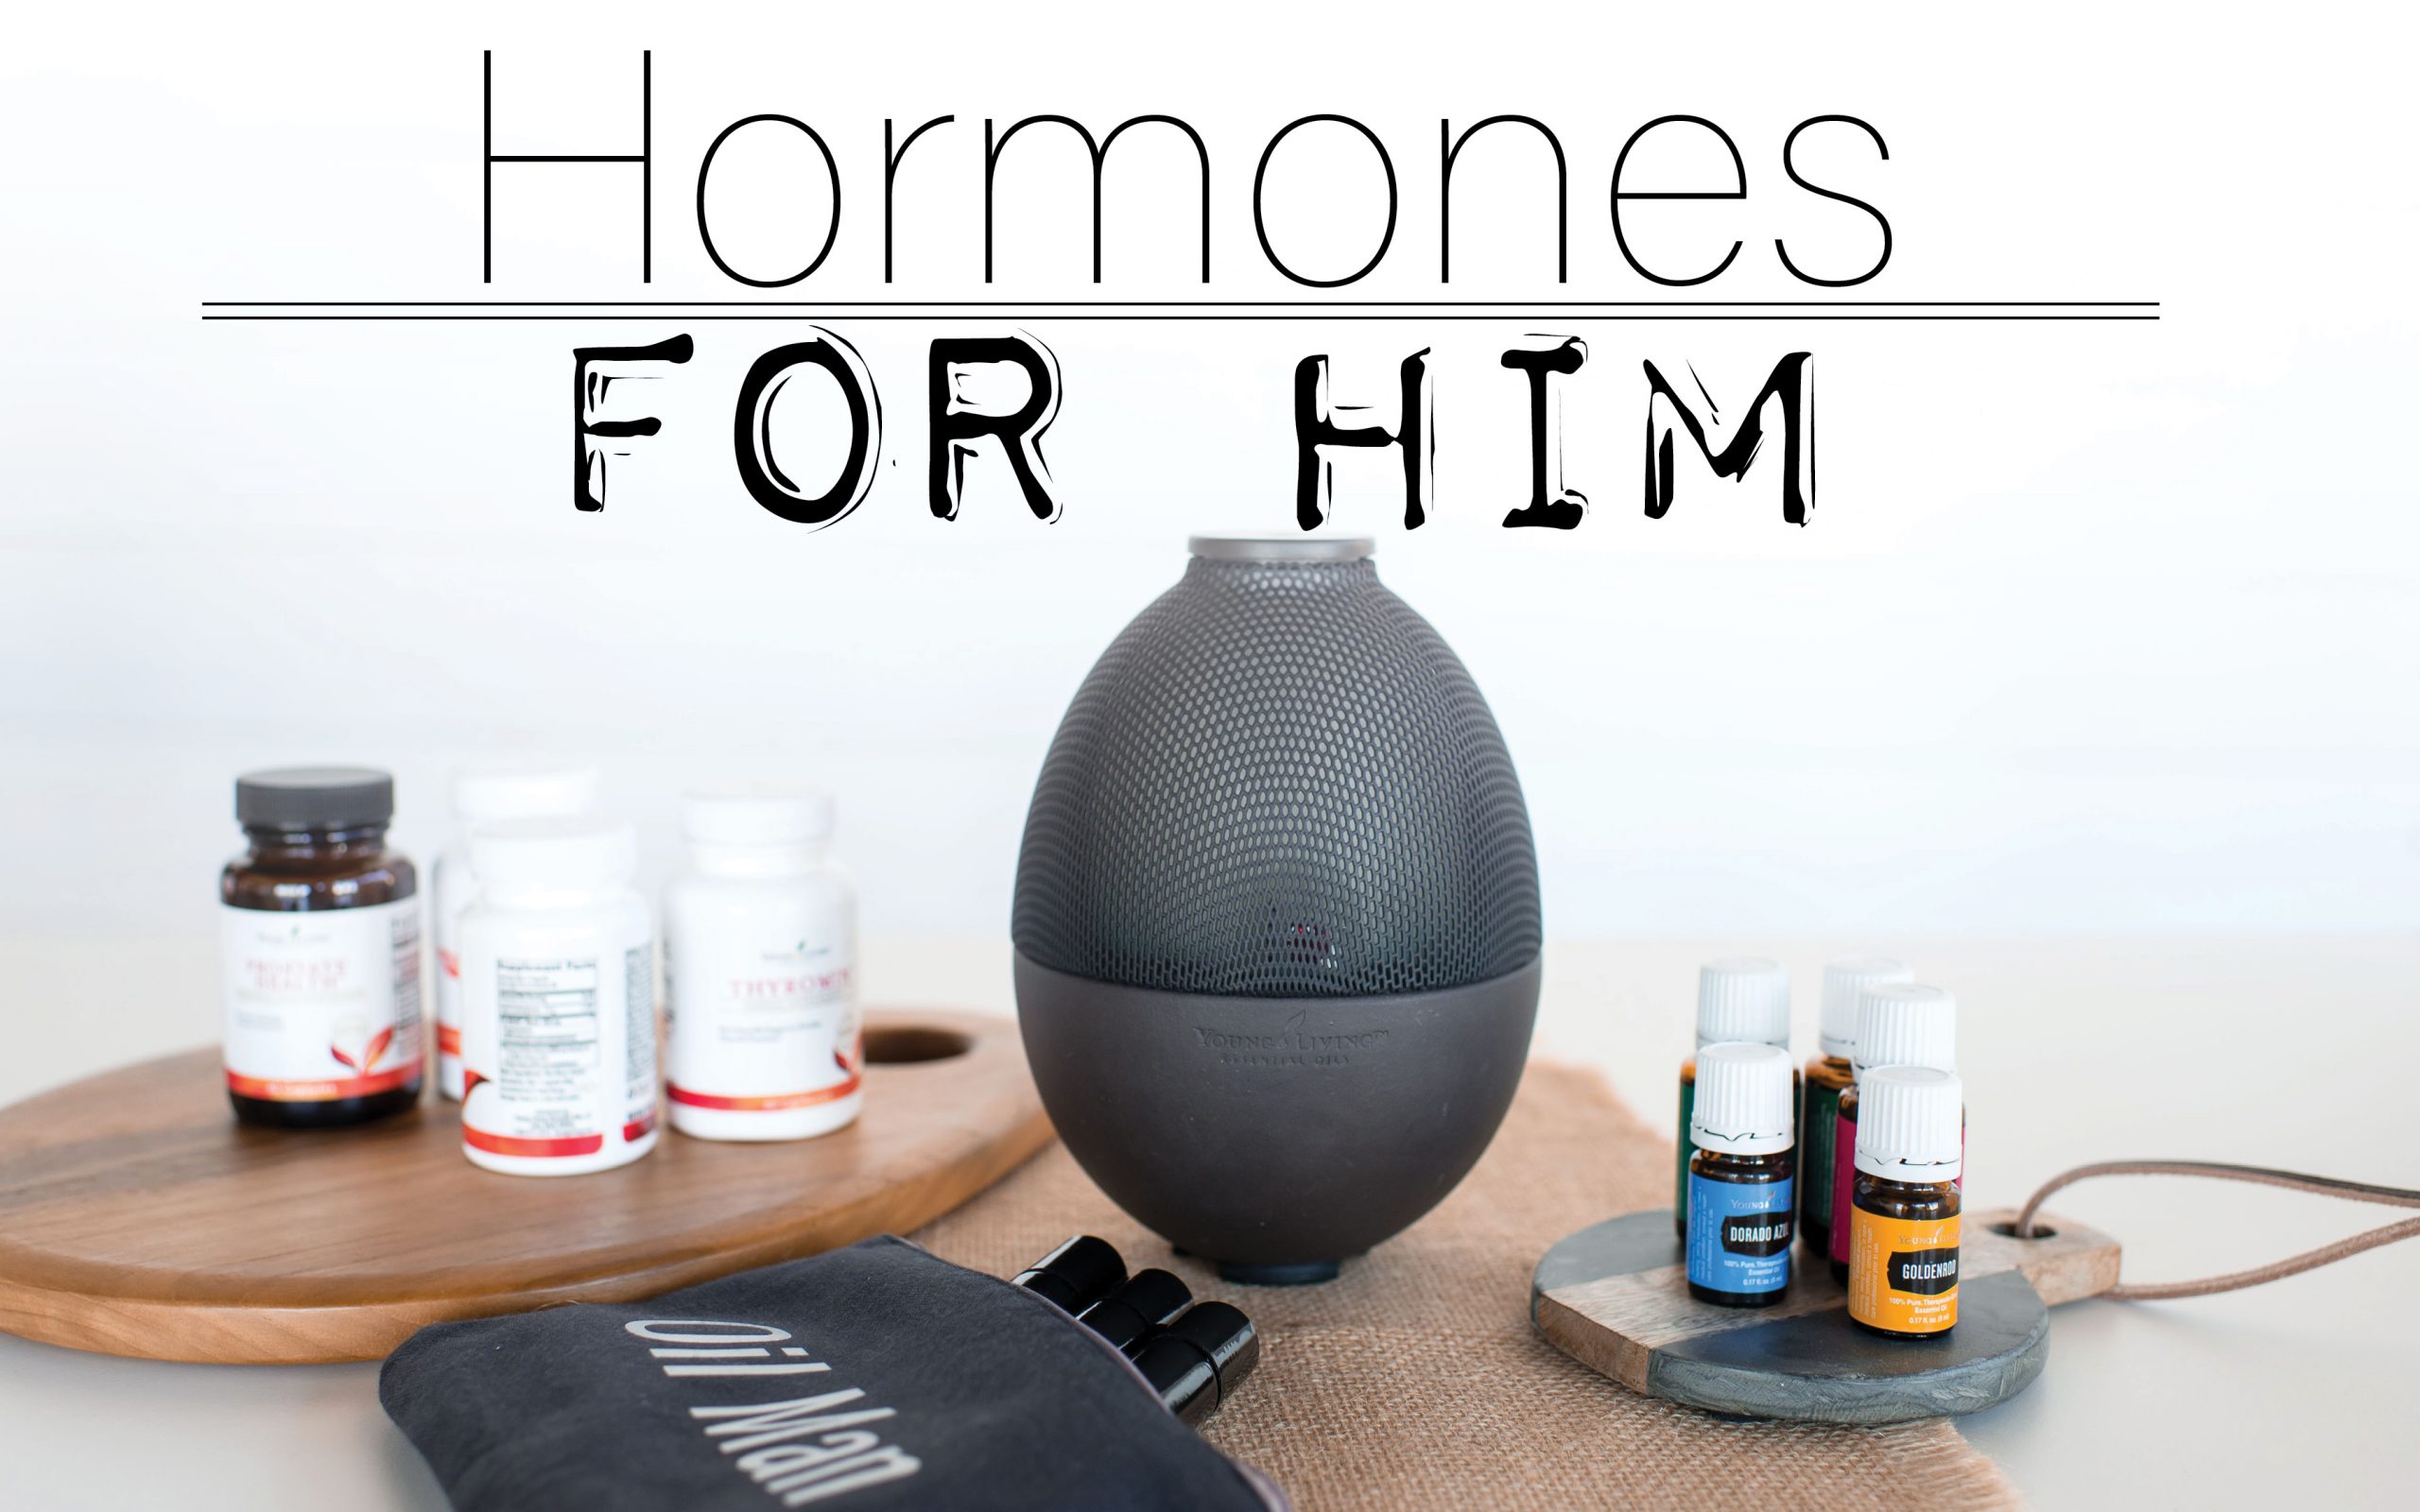 Hormones for Him